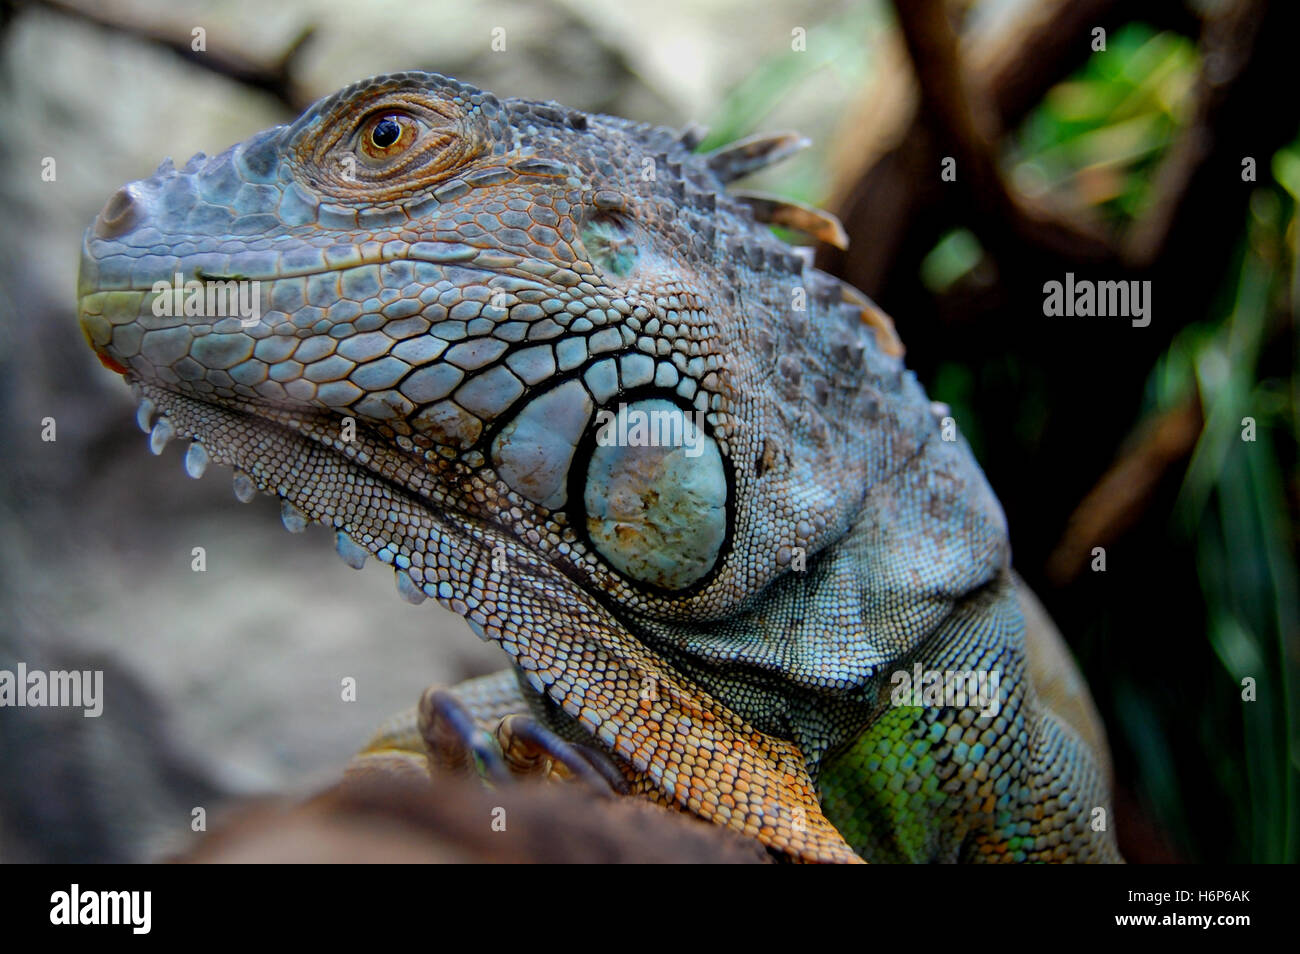 reptiles amphibians Stock Photo